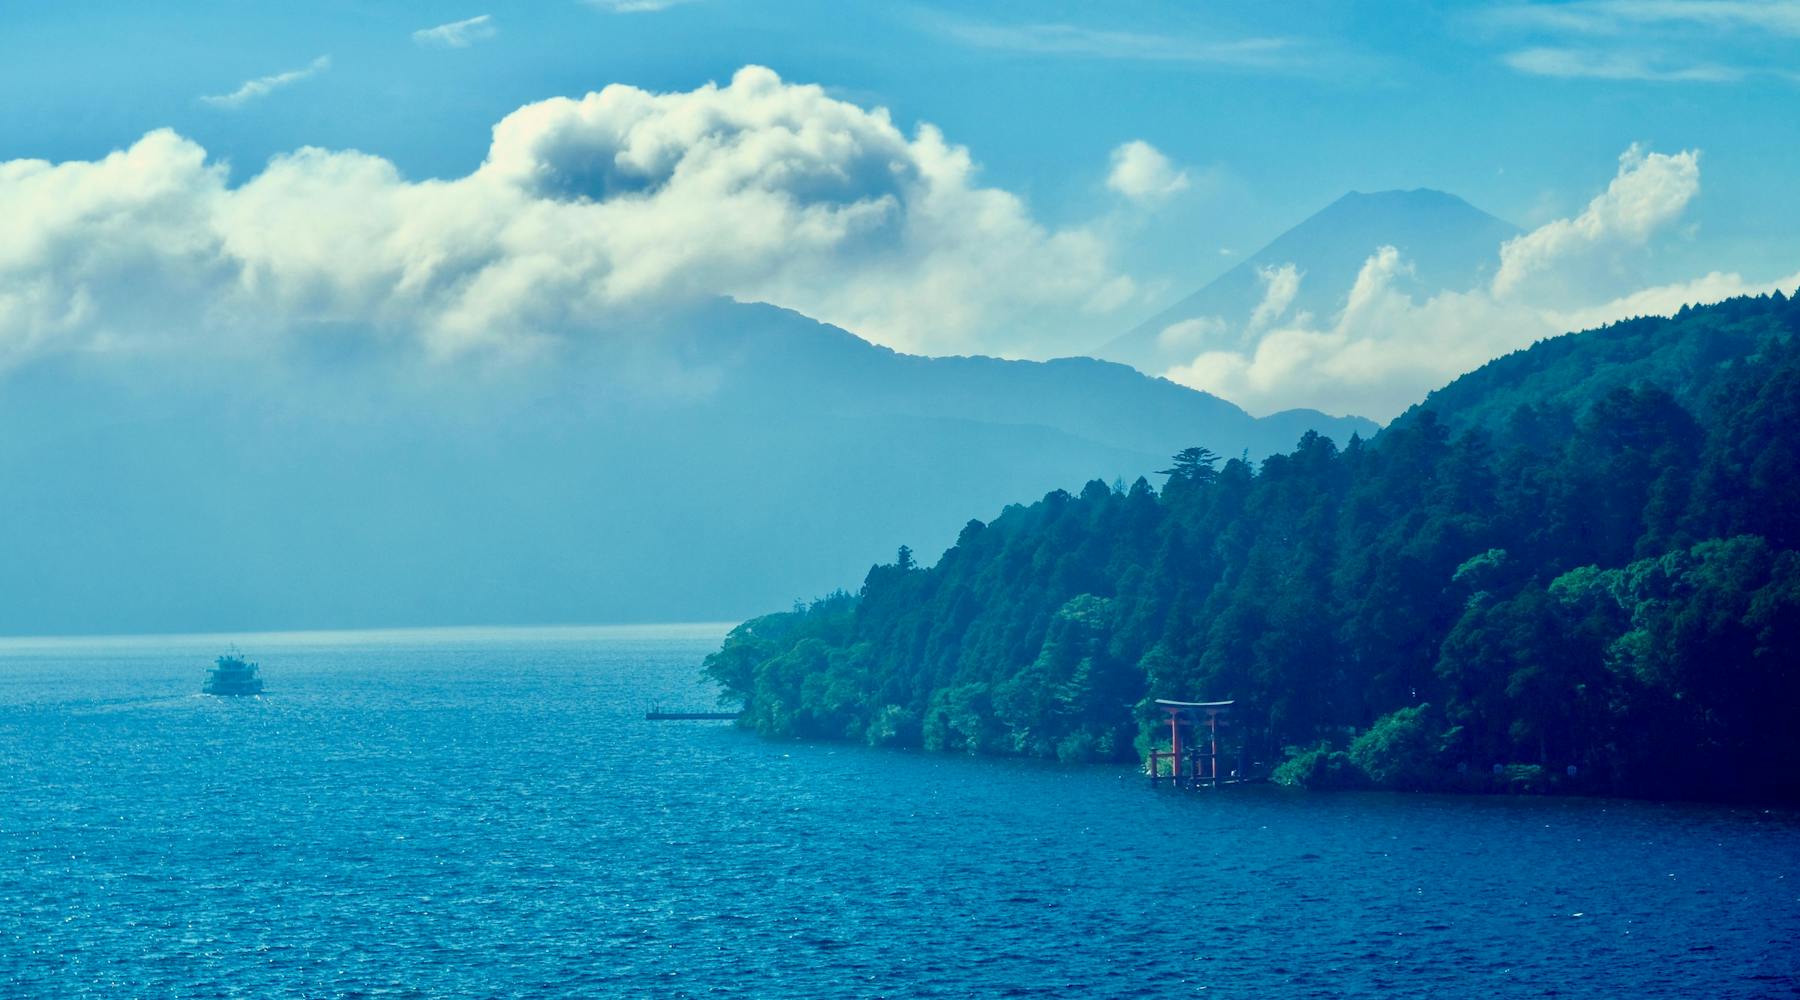 Torii gate and sailboat in Lake Hakone with Mount Fuji, Japan